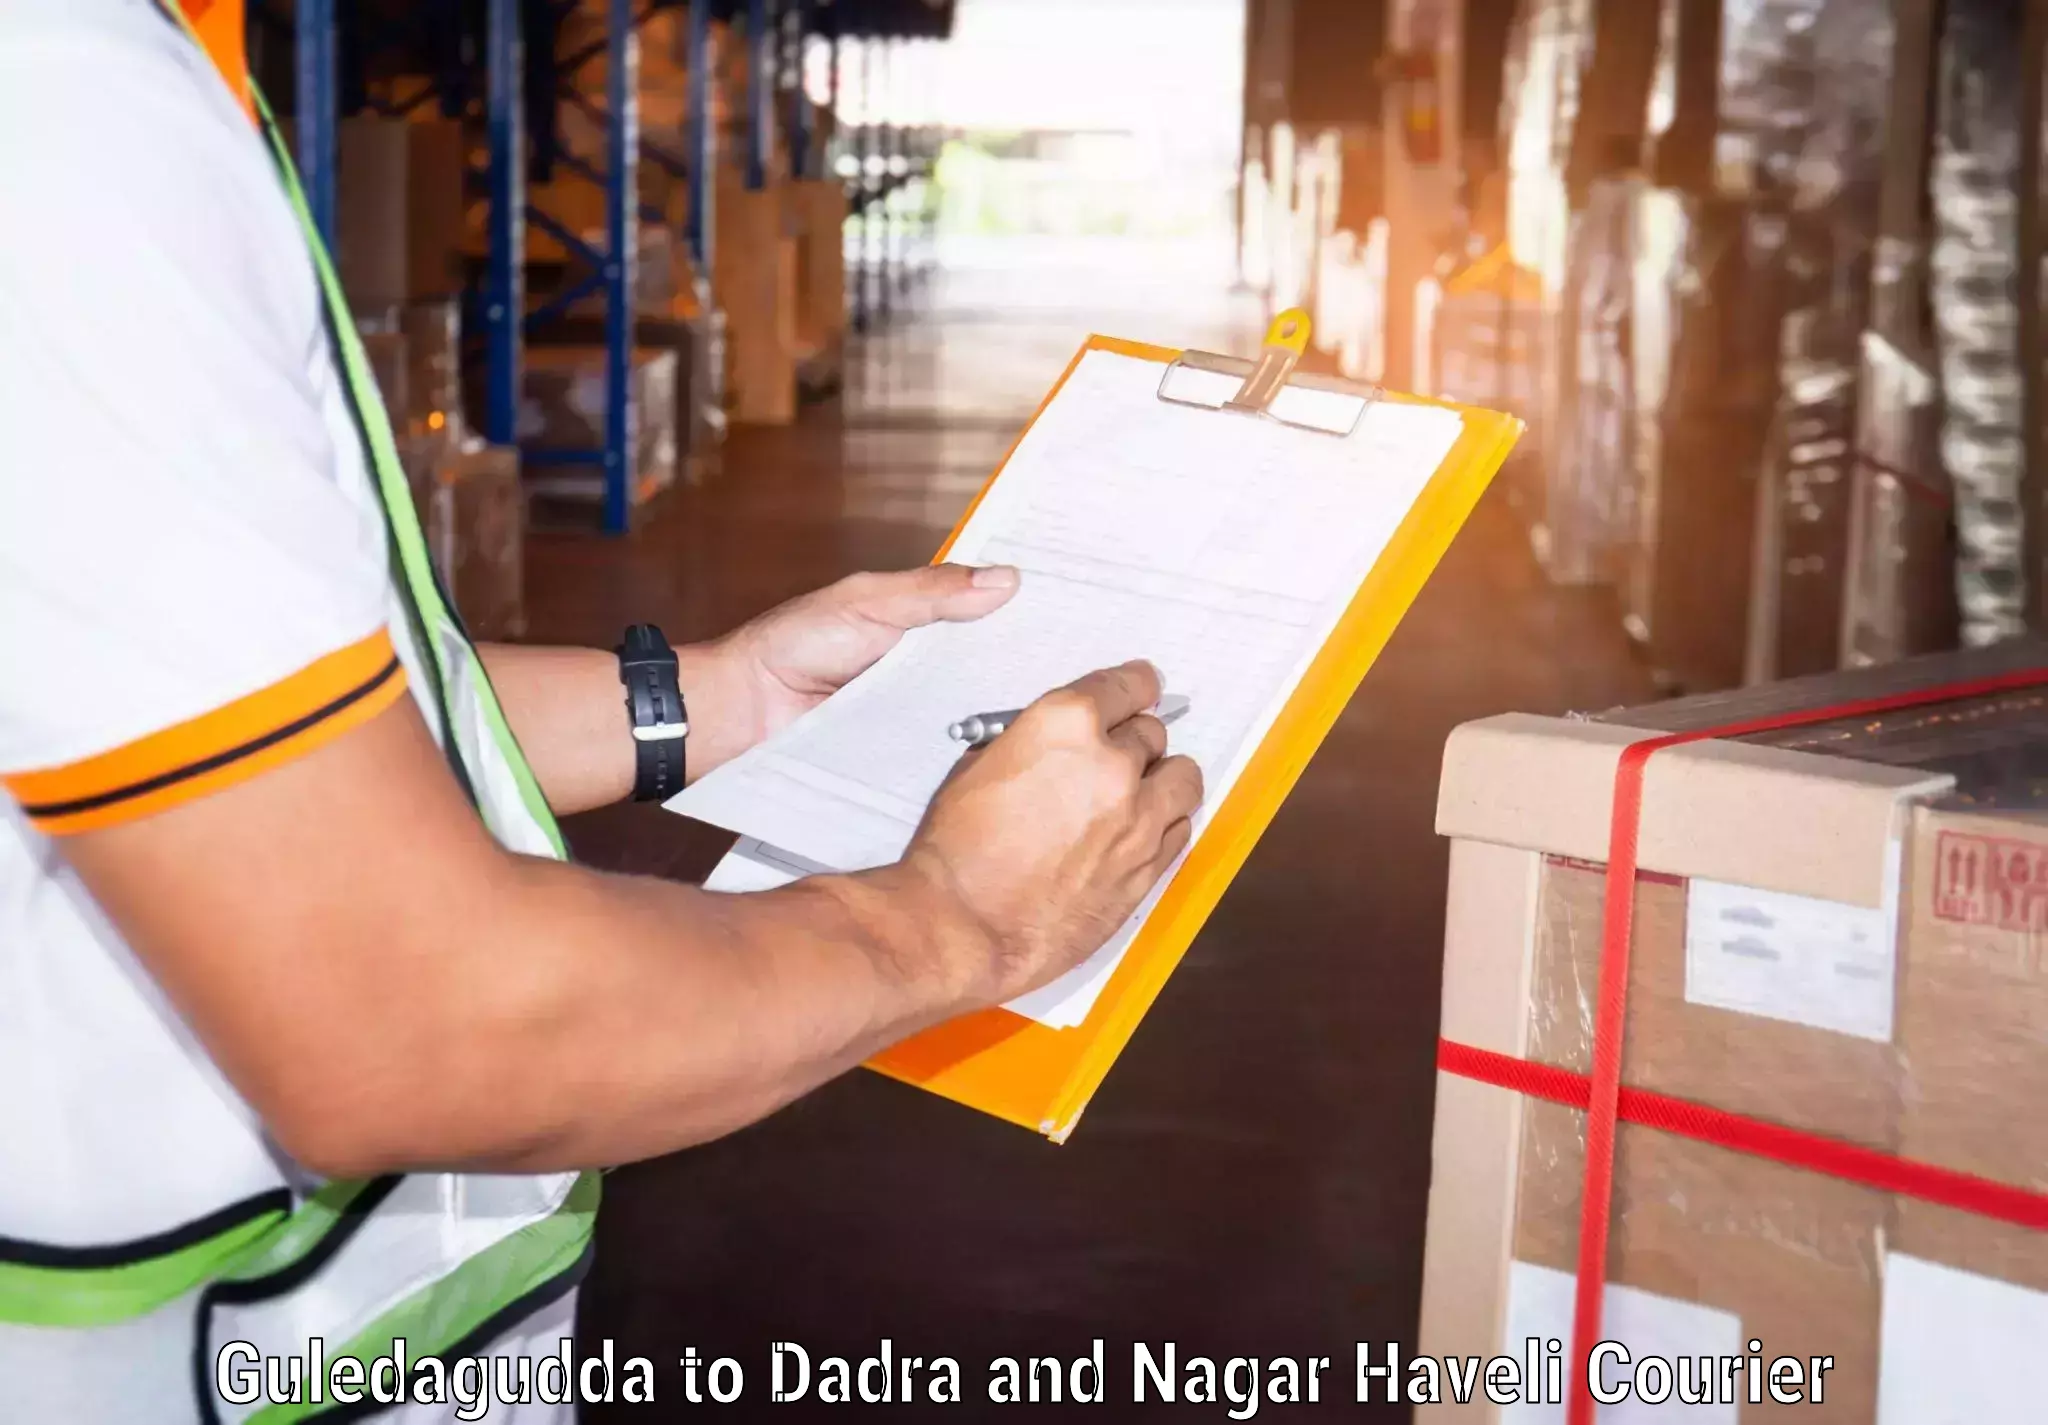 Lightweight parcel options Guledagudda to Dadra and Nagar Haveli